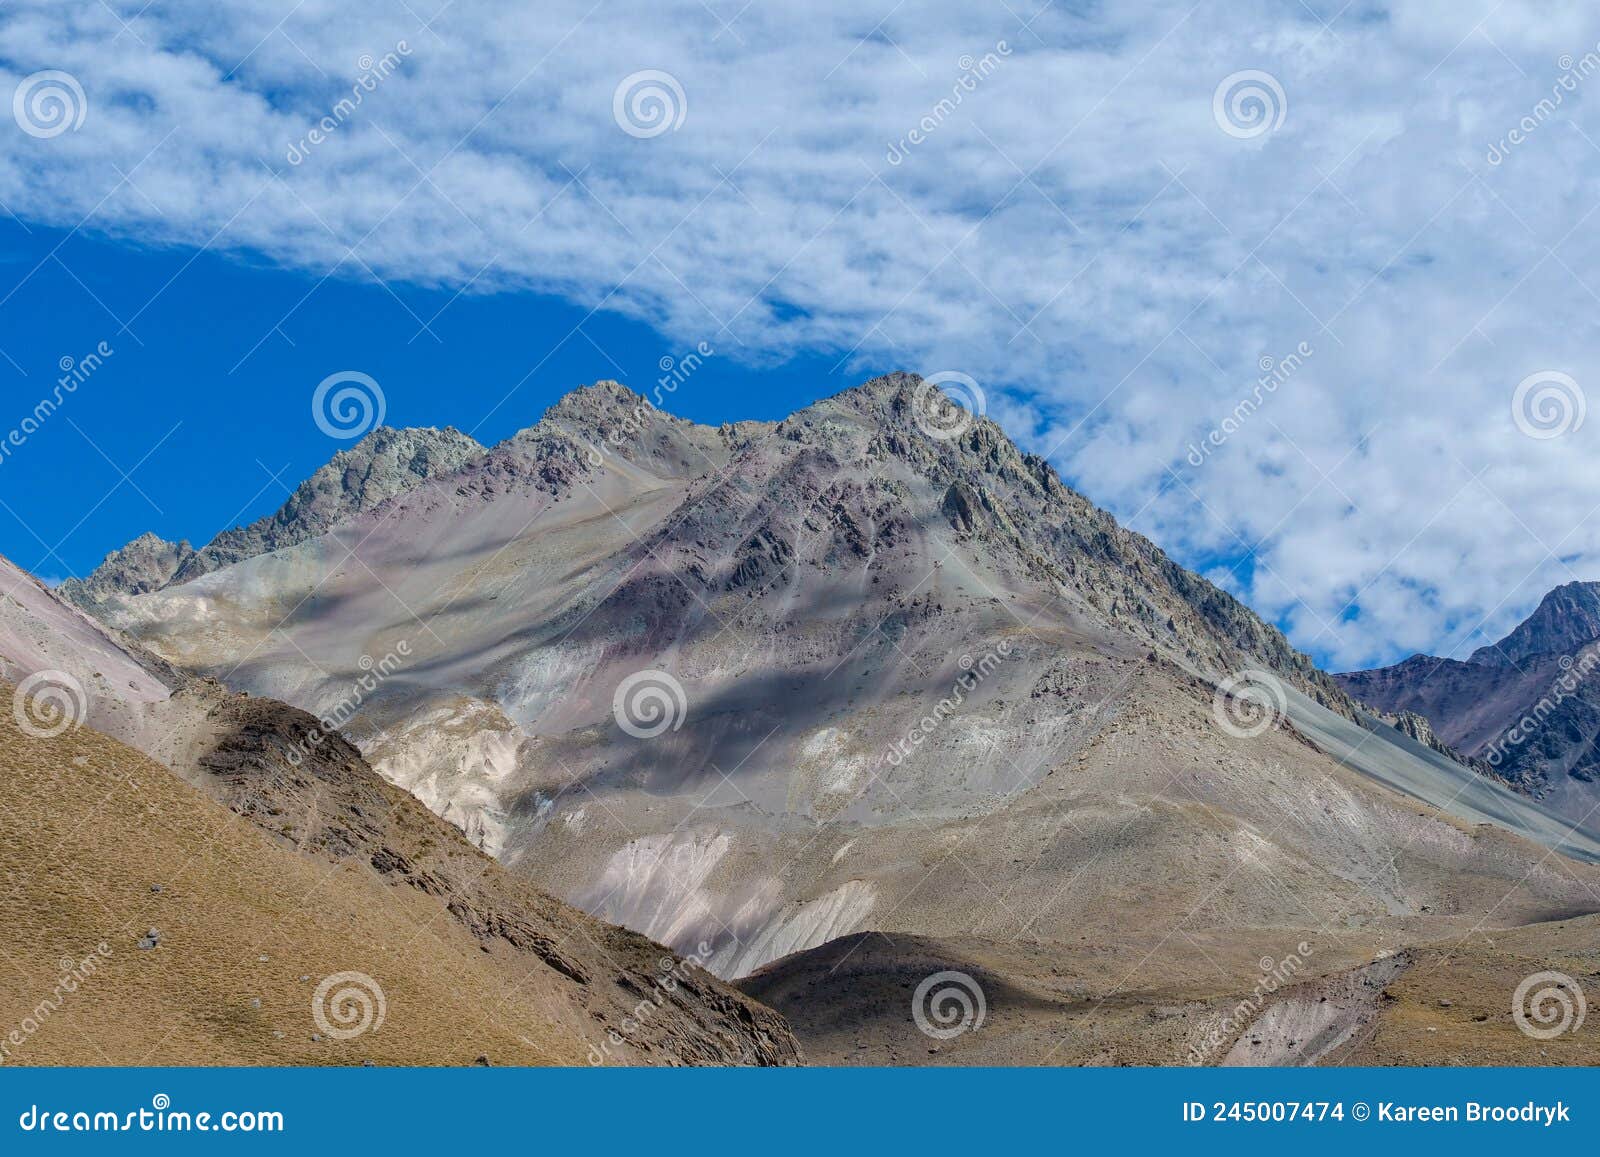 grey mountain peaks at valle de colina, cajÃÂ³n del maipo at san miguel in chile,  a popular tourist destination